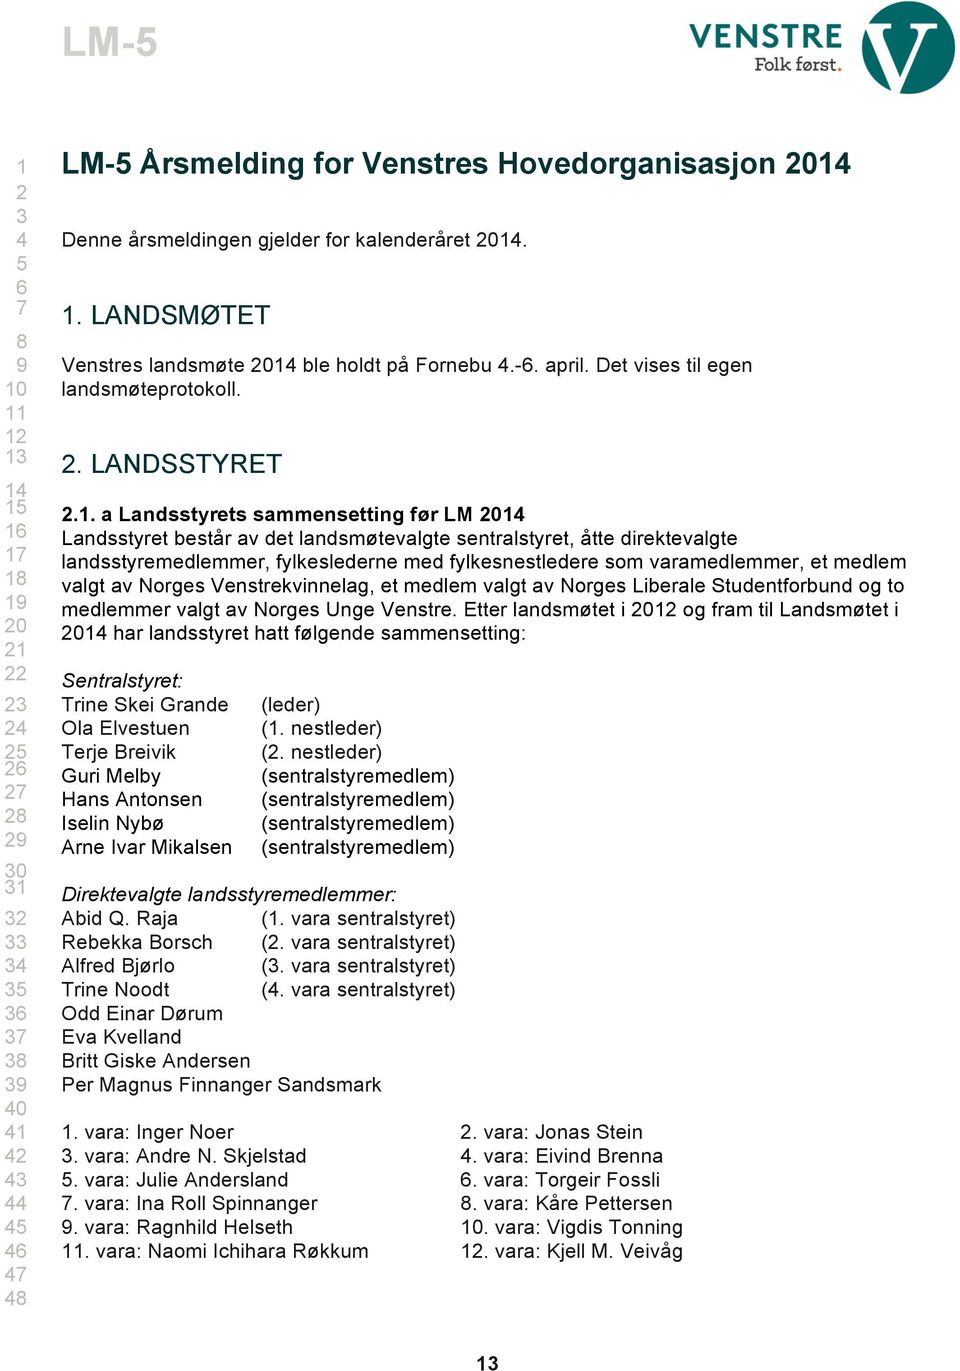 . 1. LANDSMØTET Venstres landsmøte 2014 ble holdt på Fornebu 4.-6. april. Det vises til egen landsmøteprotokoll. 2. LANDSSTYRET 2.1. a Landsstyrets sammensetting før LM 2014 Landsstyret består av det